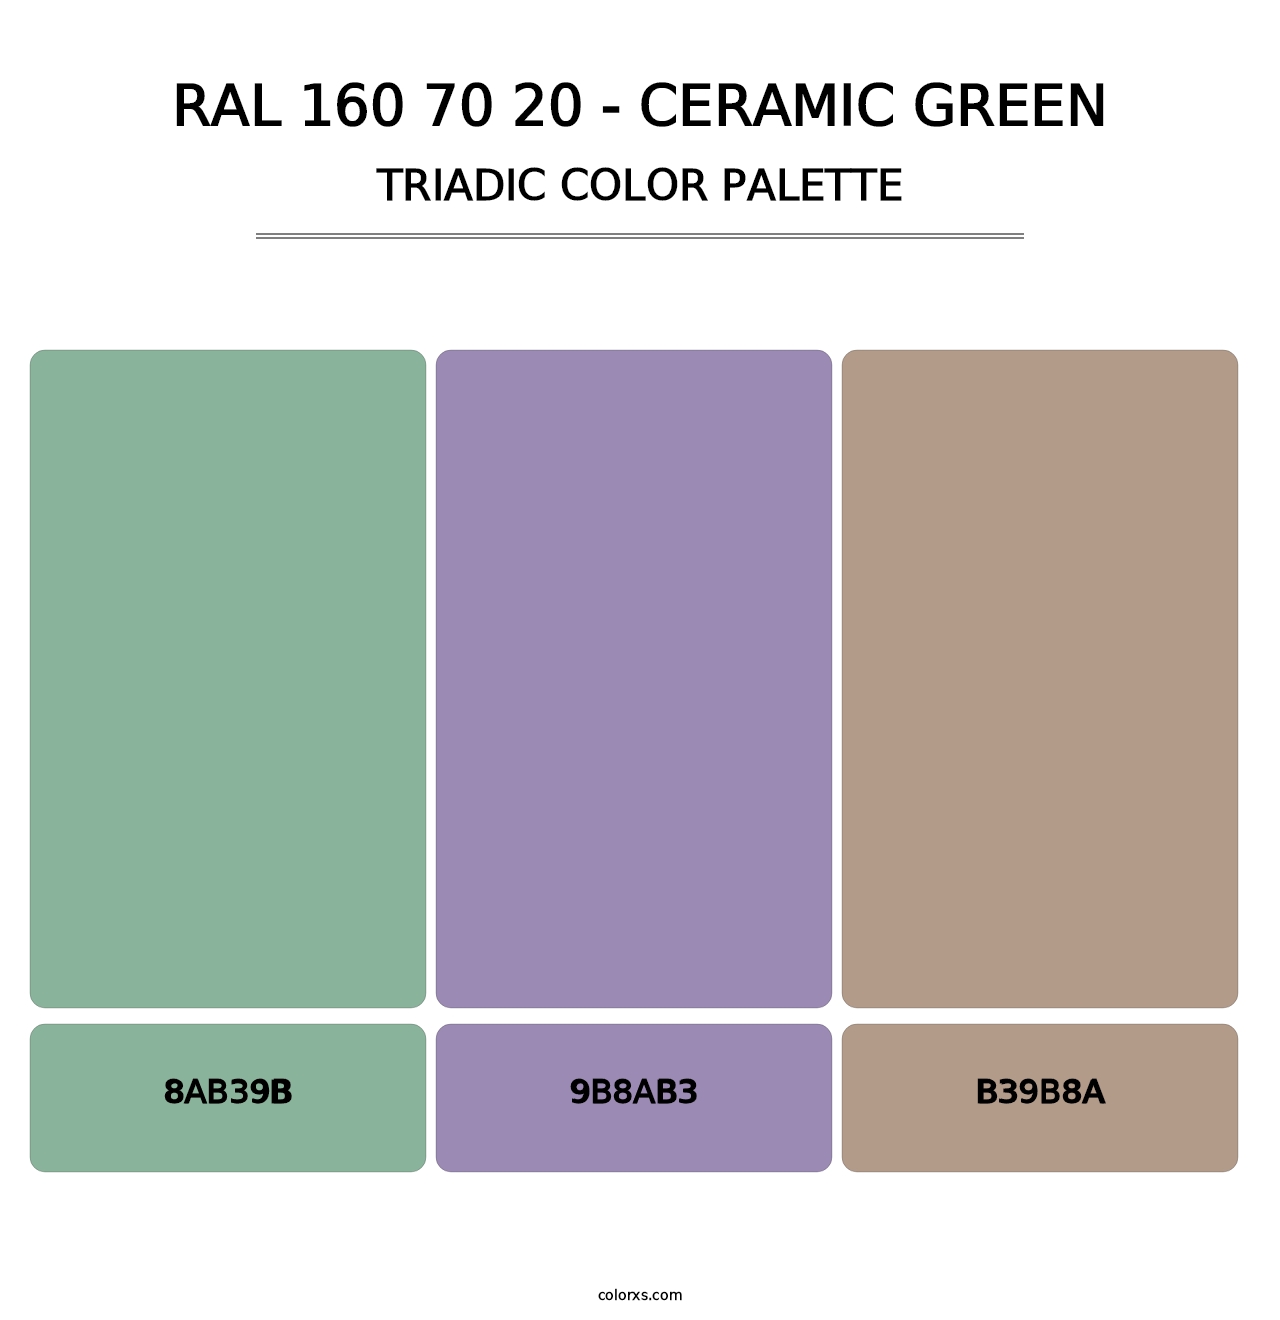 RAL 160 70 20 - Ceramic Green - Triadic Color Palette